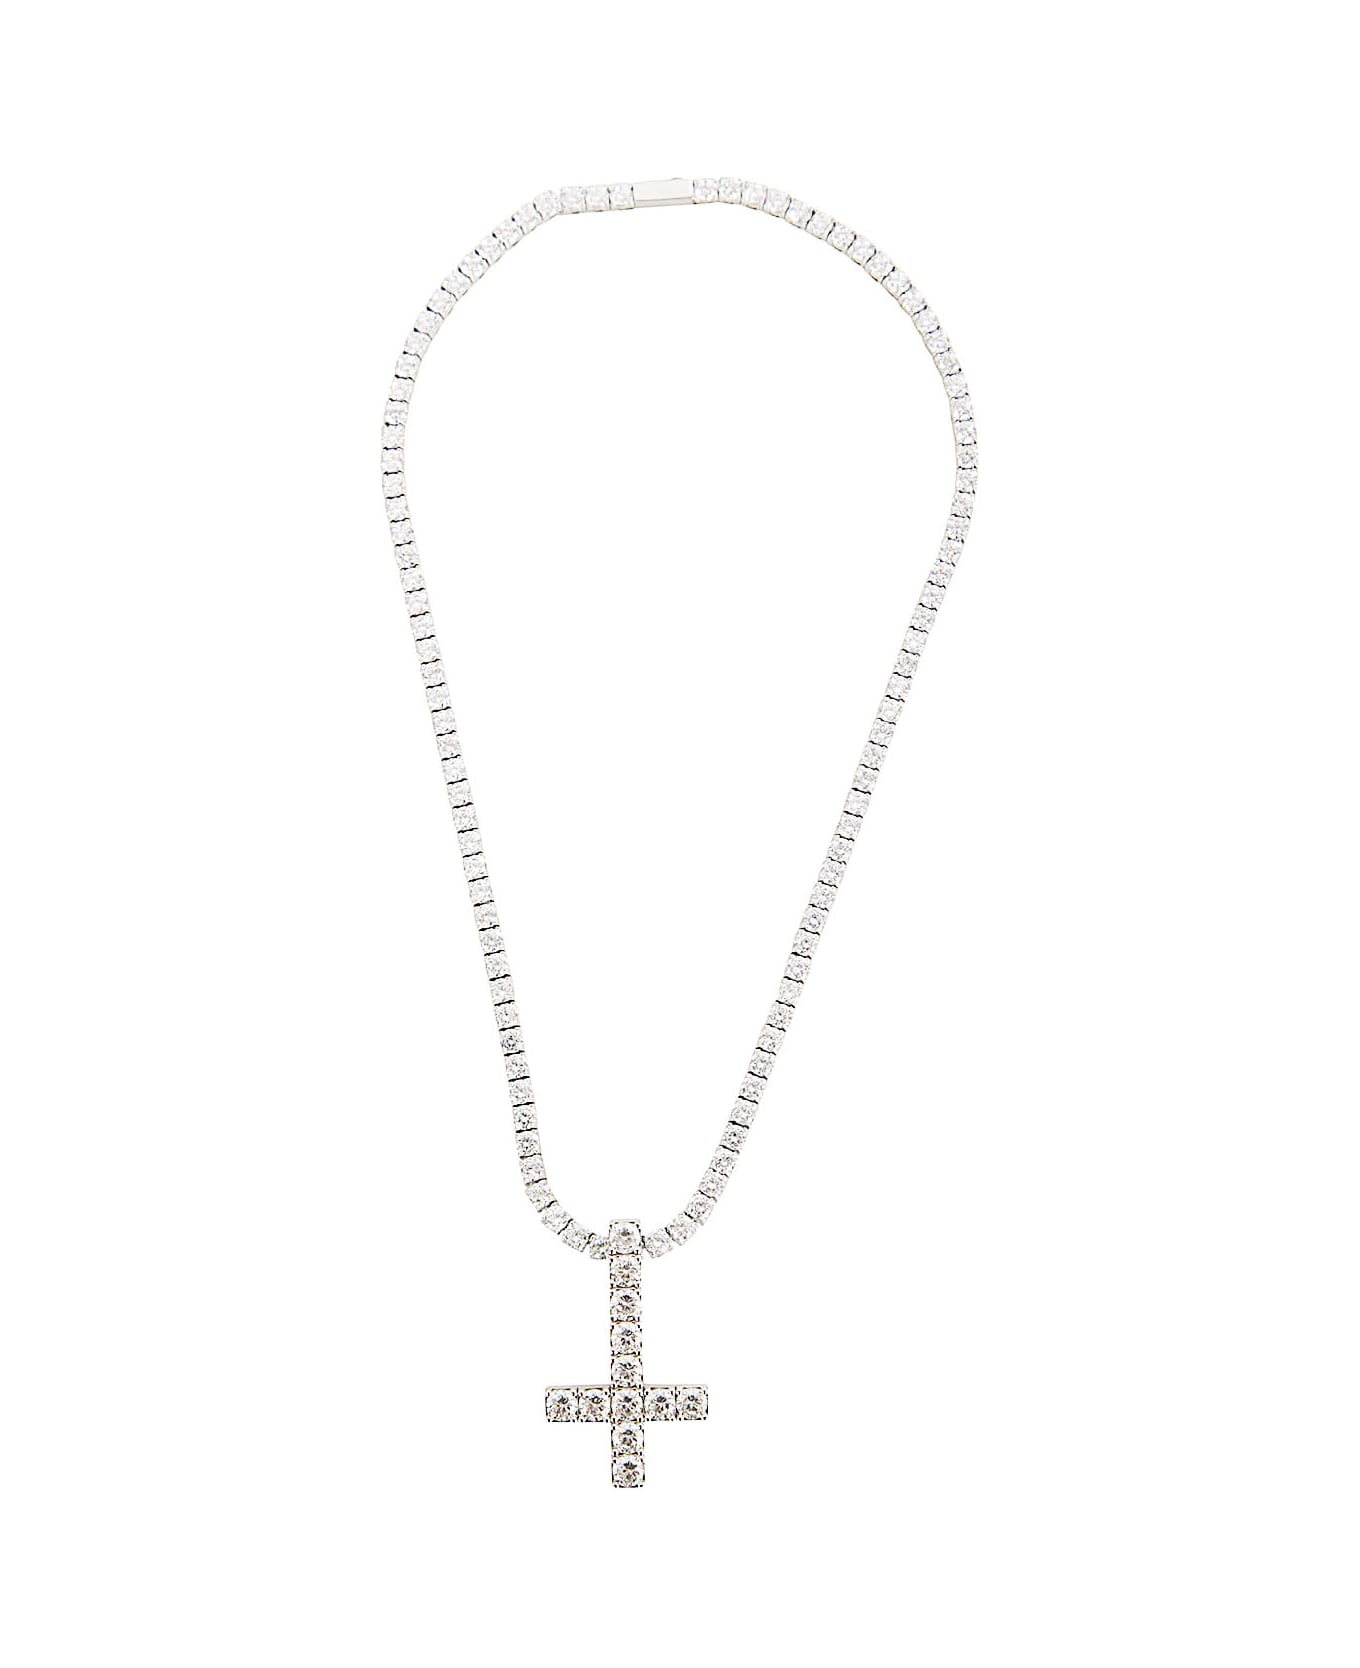 Darkai Reversed Cross Necklace - White